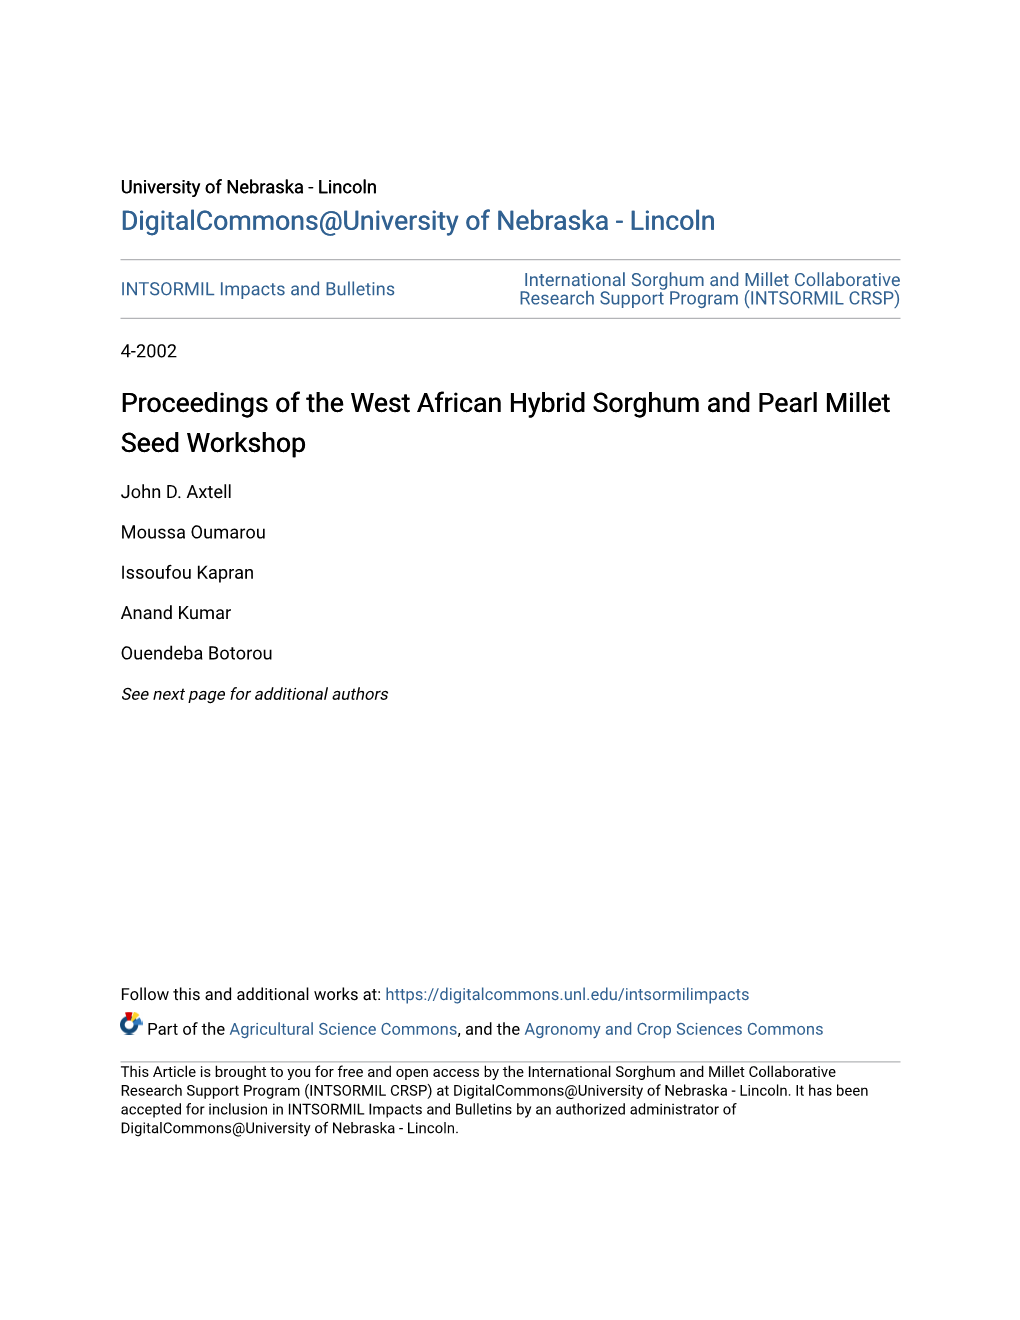 Proceedings of the West African Hybrid Sorghum and Pearl Millet Seed Workshop